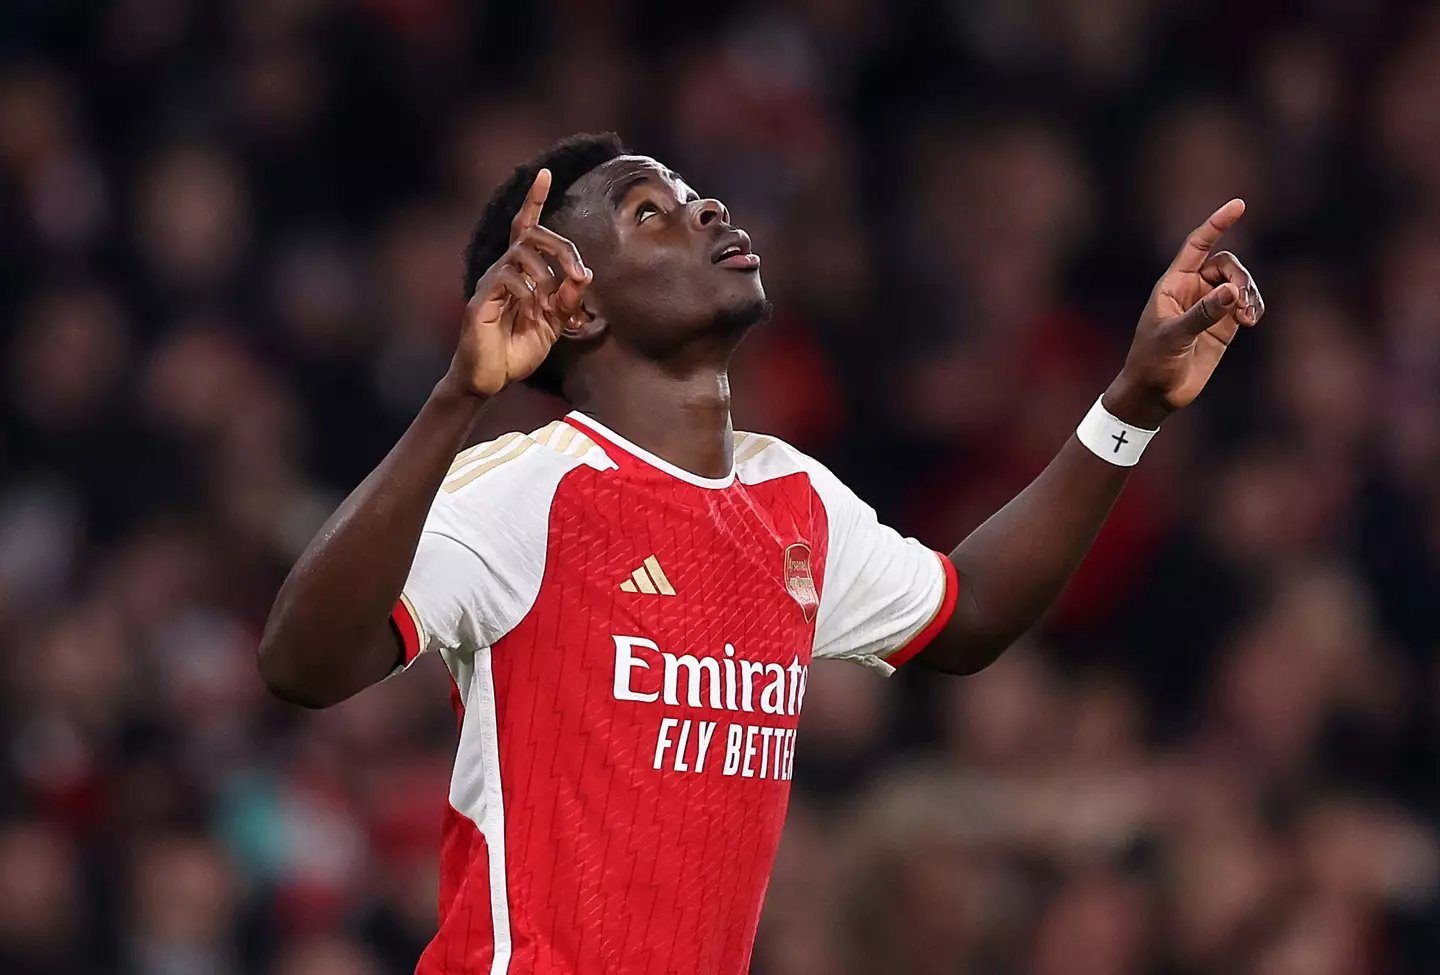 Bukayo Saka celebrates scoring a goal for Arsenal. Image: Getty